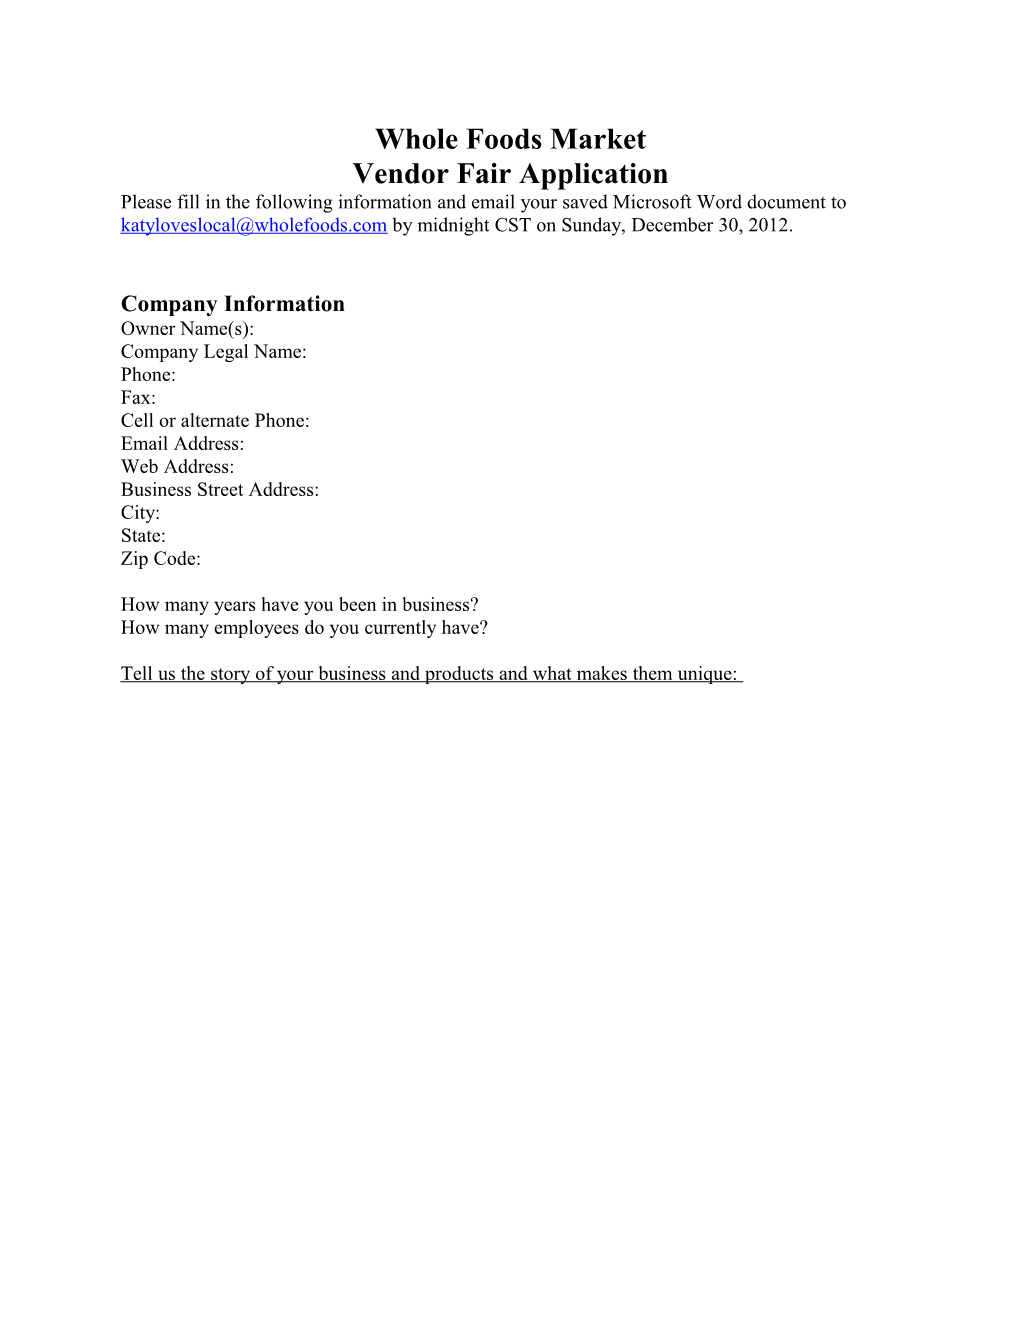 Vendor Fair Application